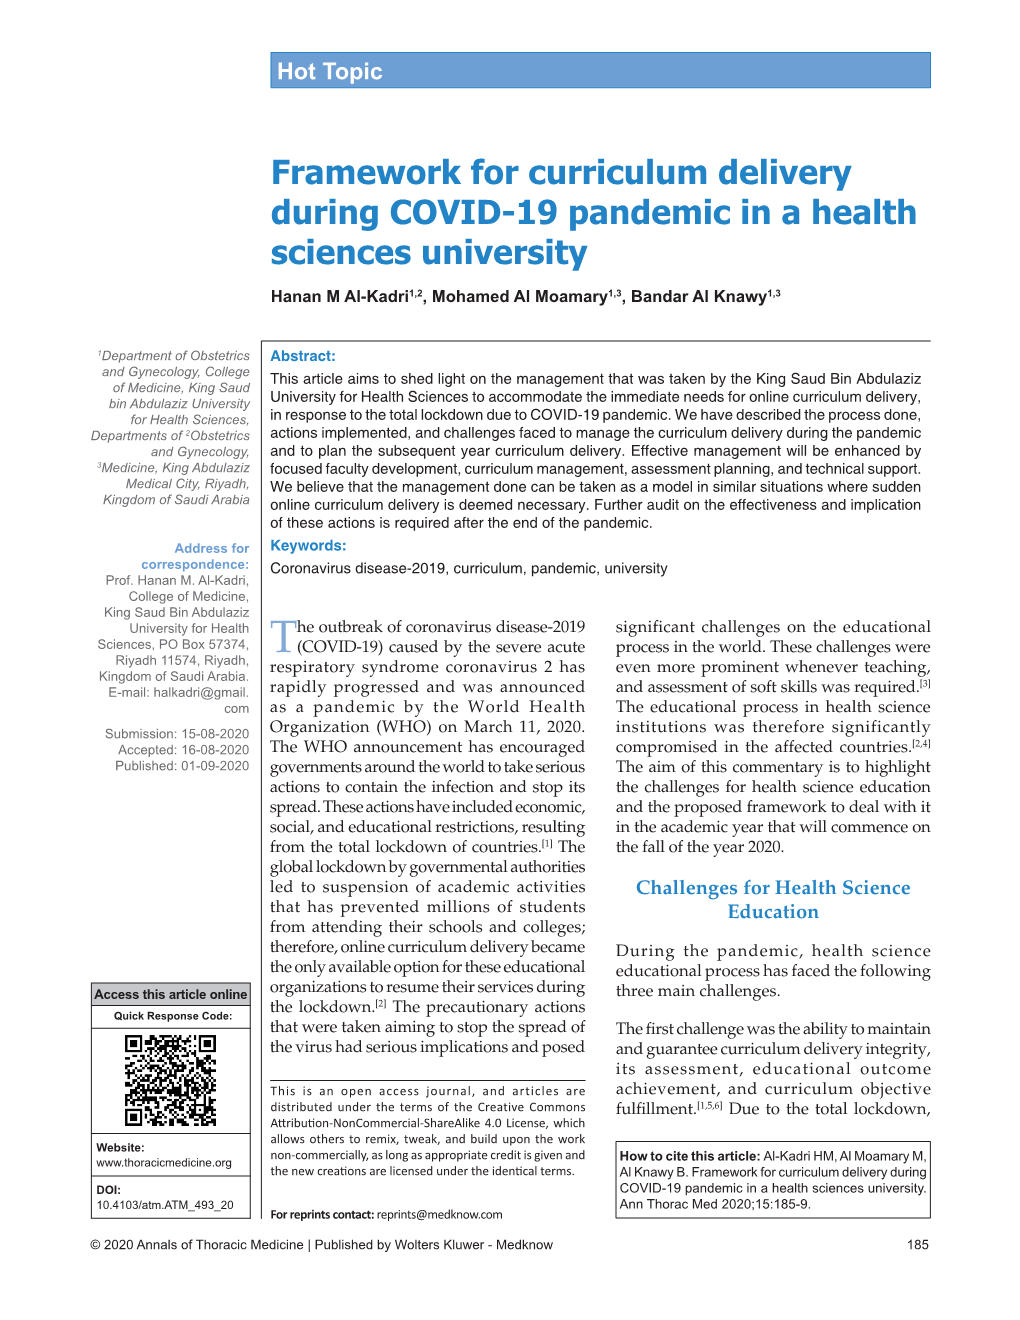 Framework for Curriculum Delivery During COVID‑19 Pandemic in a Health Sciences University Hanan M Al-Kadri1,2, Mohamed Al Moamary1,3, Bandar Al Knawy1,3